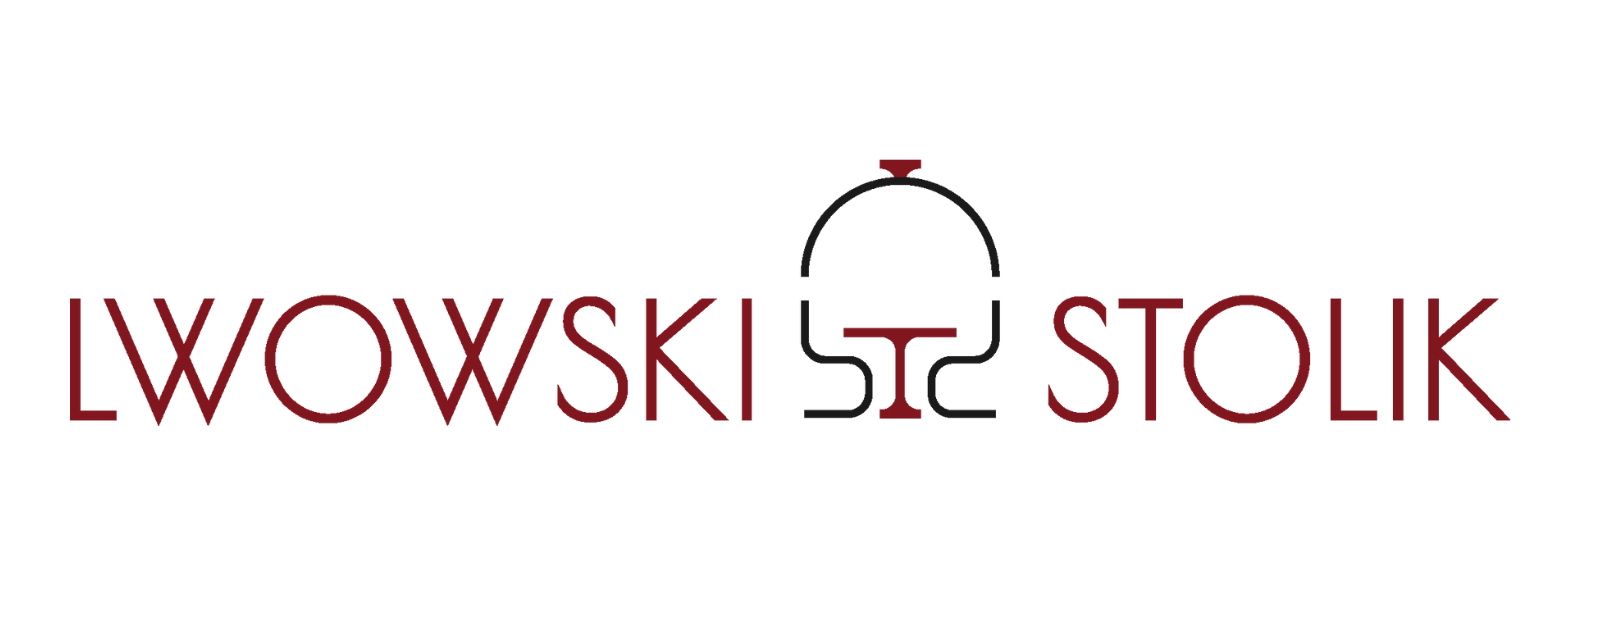 lwowski stolik logo